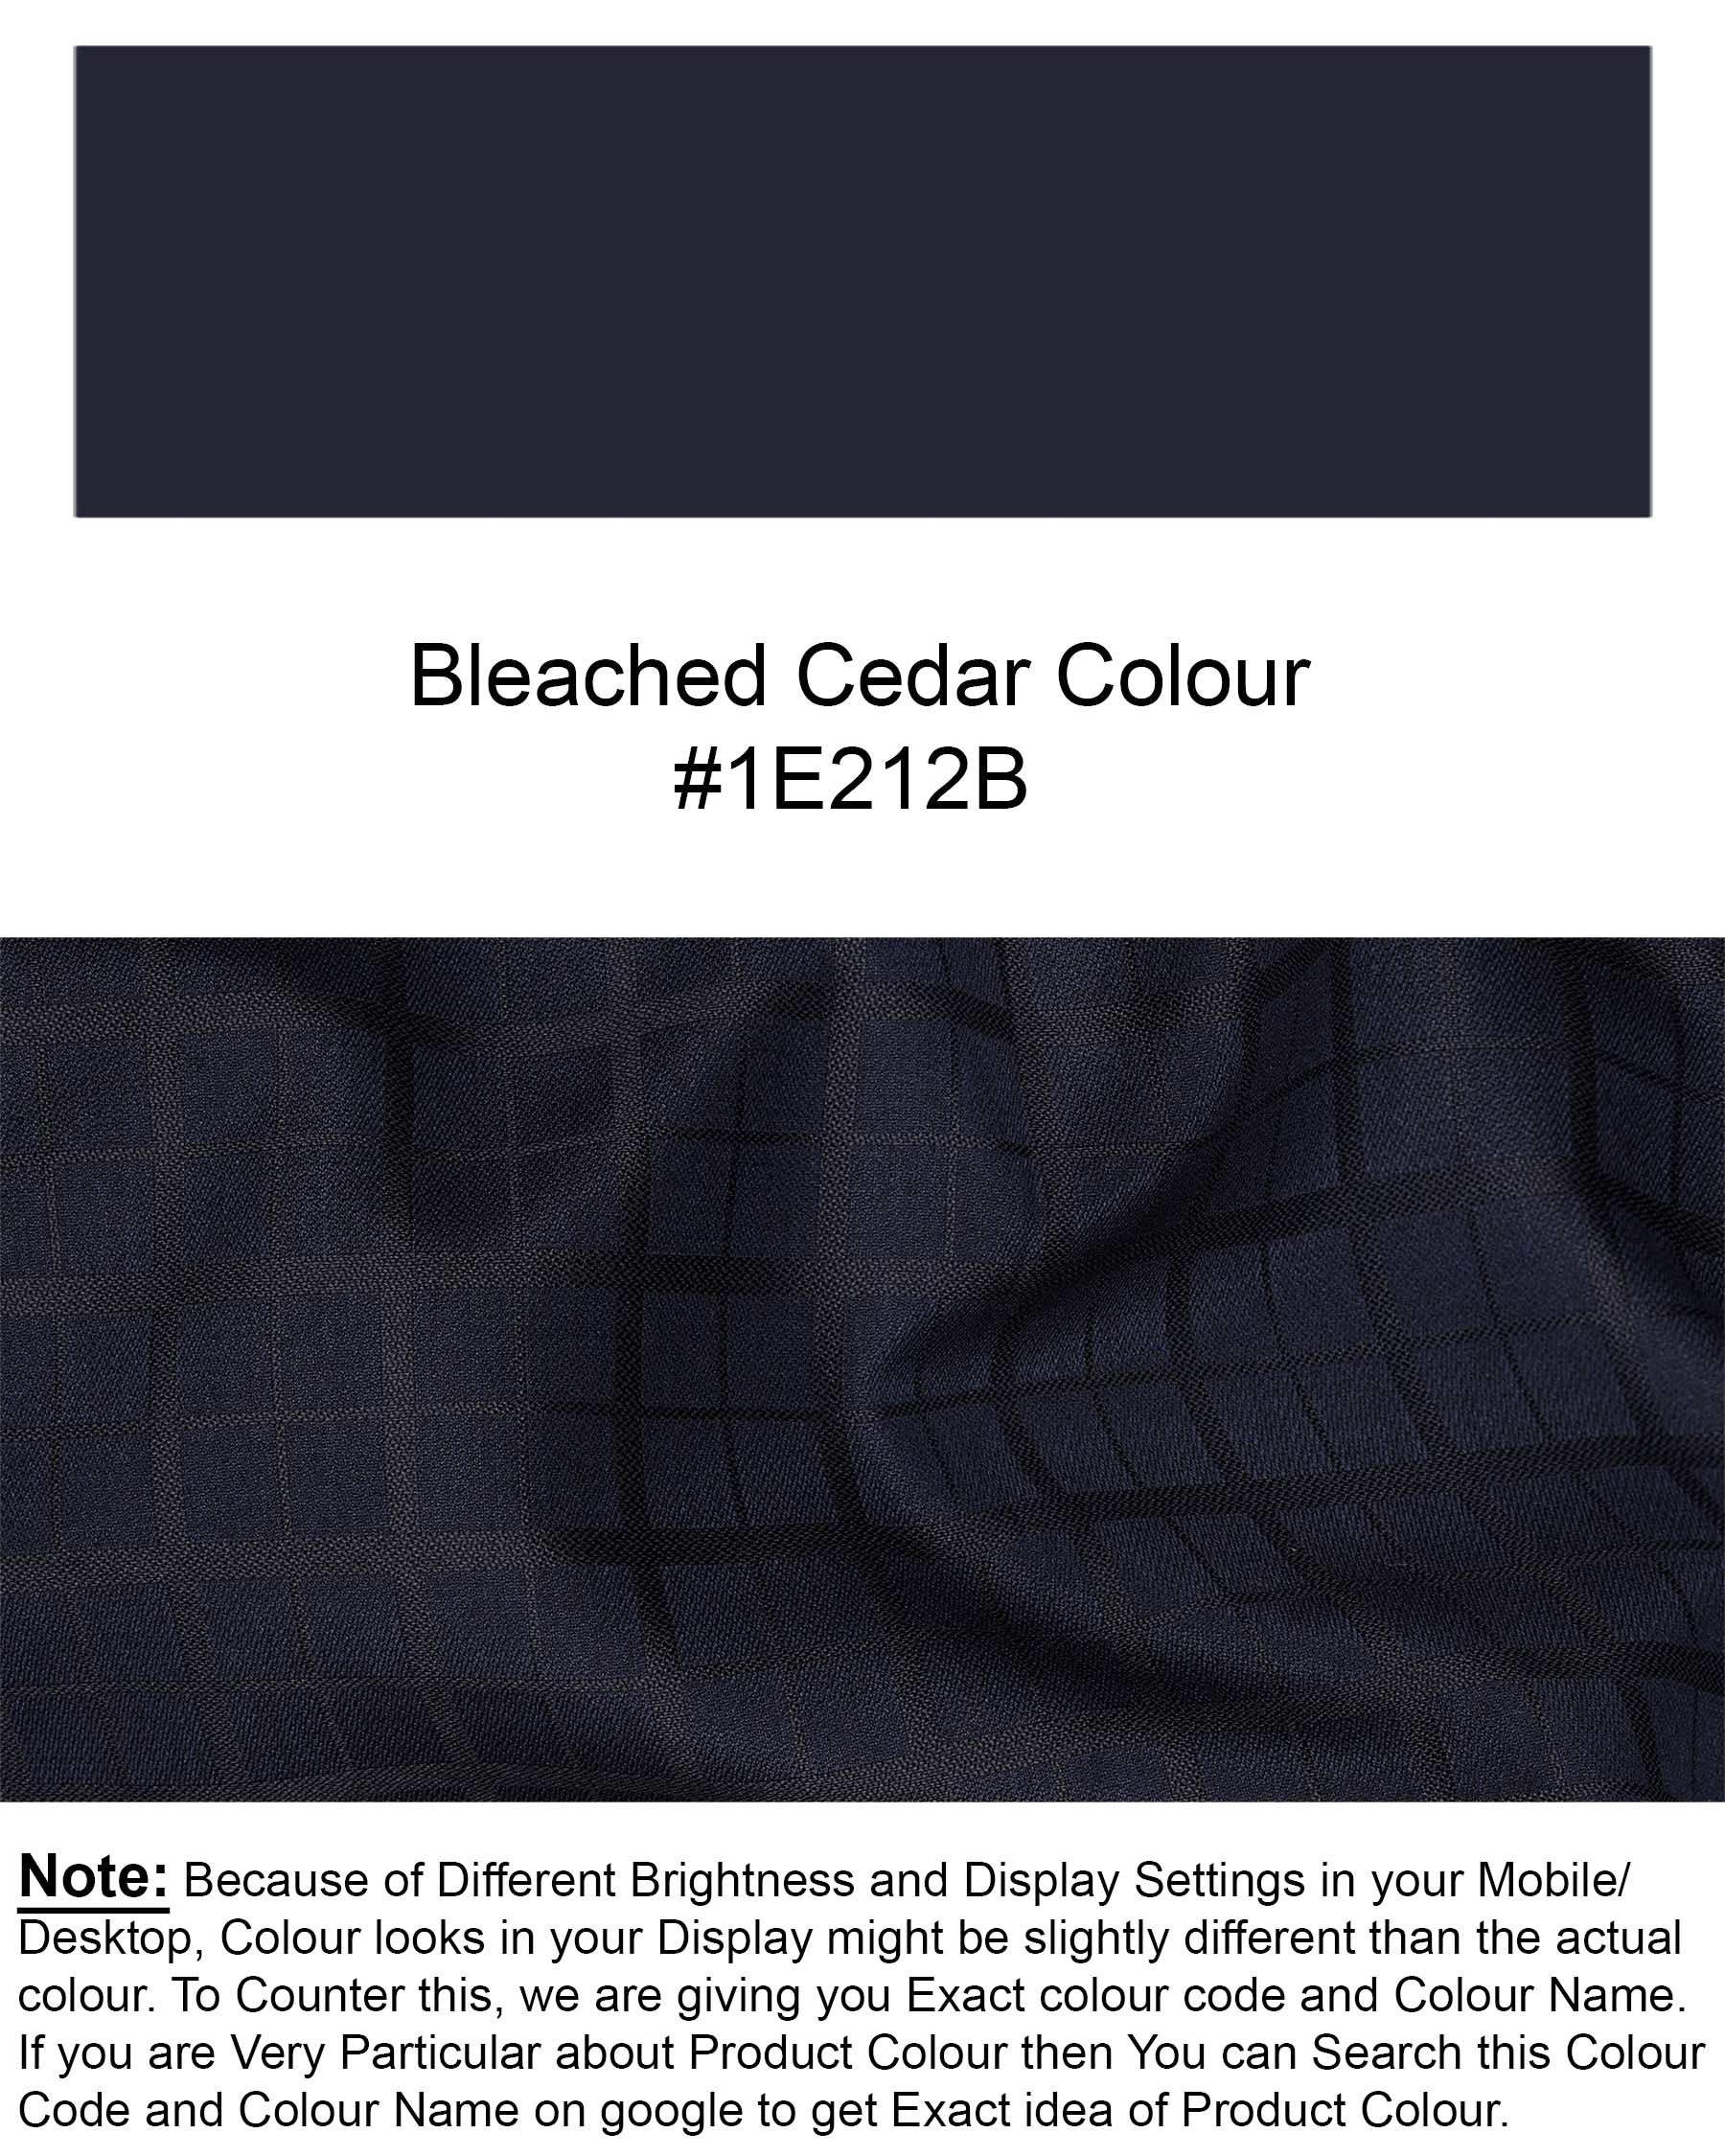 Bleached Cedar Navy Blue Plaid Waistcoat V1938-36, V1938-38, V1938-40, V1938-42, V1938-44, V1938-46, V1938-48, V1938-50, V1938-52, V1938-54, V1938-56, V1938-58, V1938-60